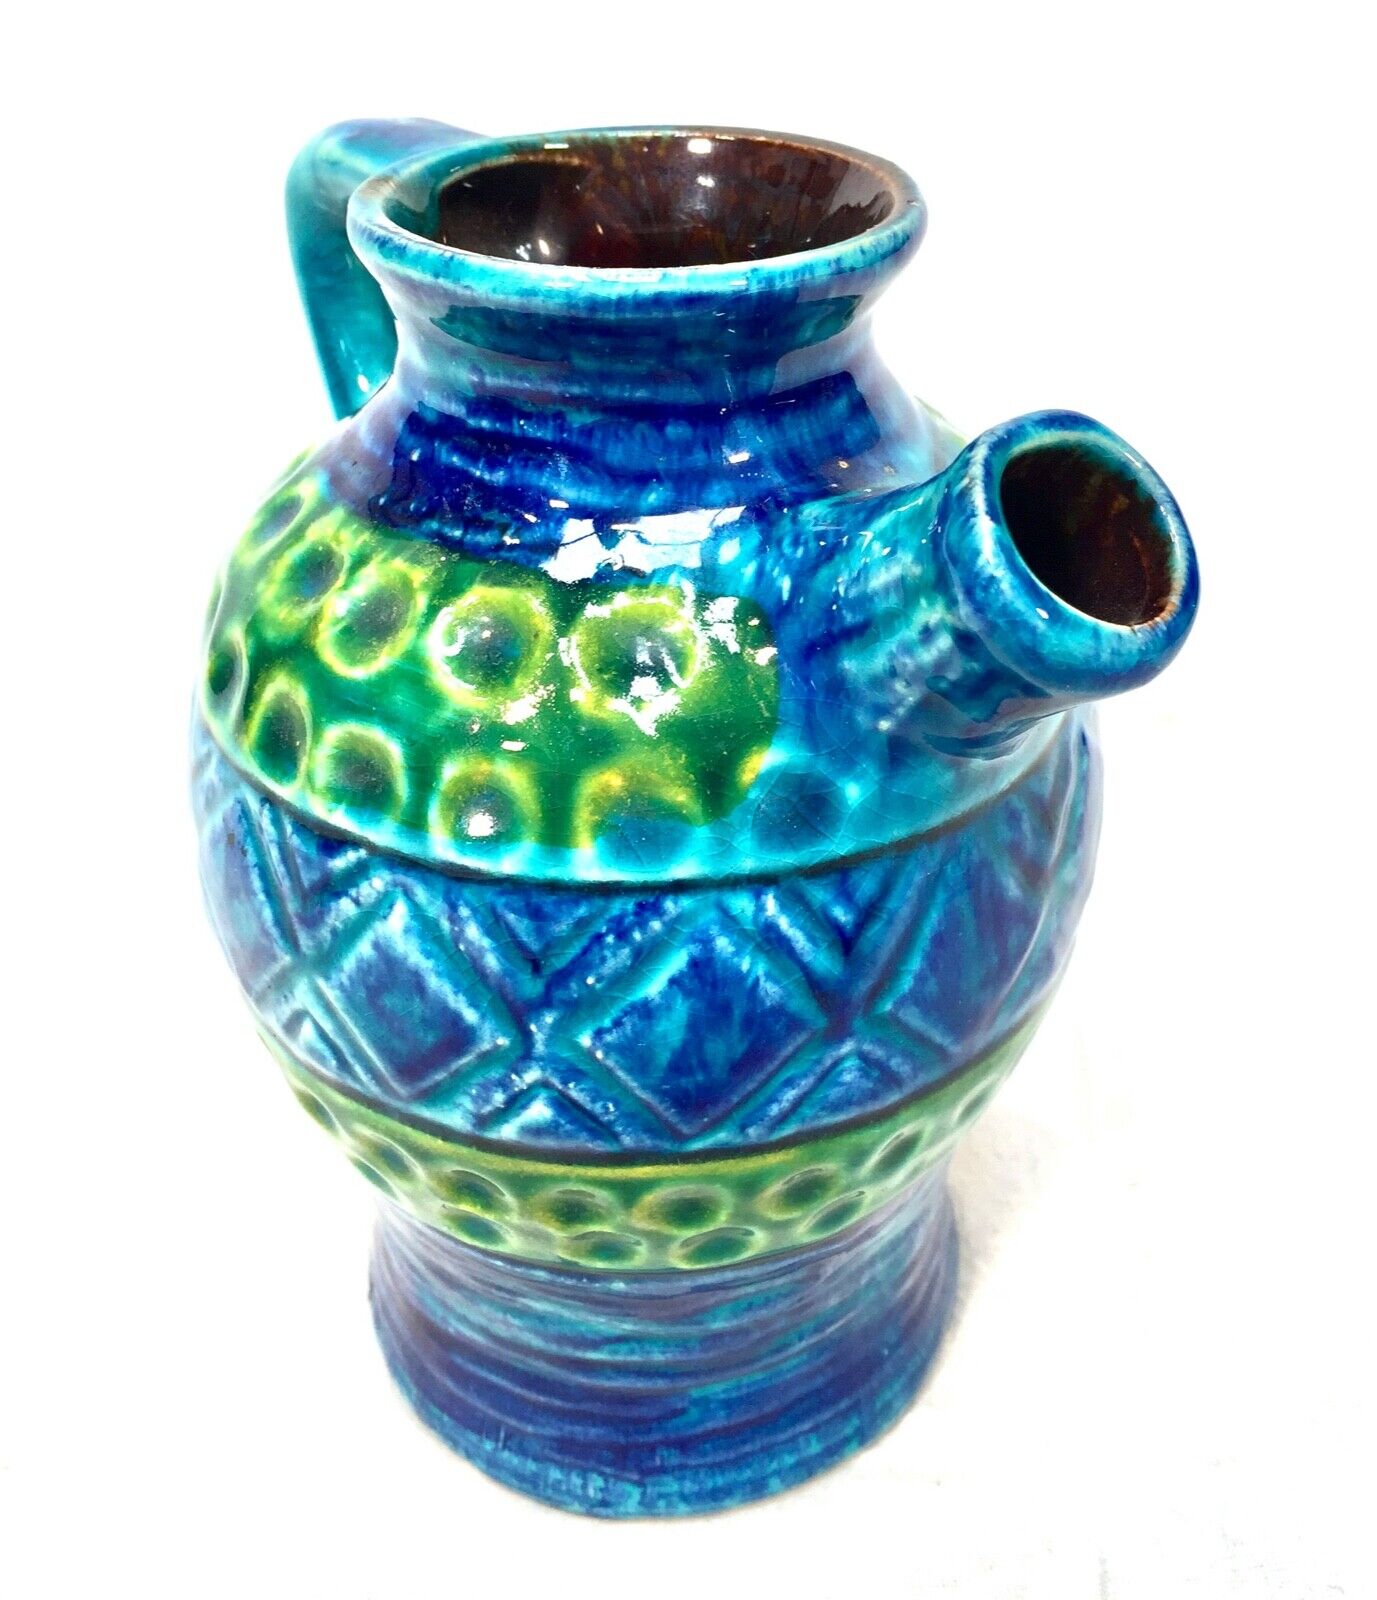 Vintage West German Pottery Fat Vase / Turquoise & Blue / Retro 1970s / Jug